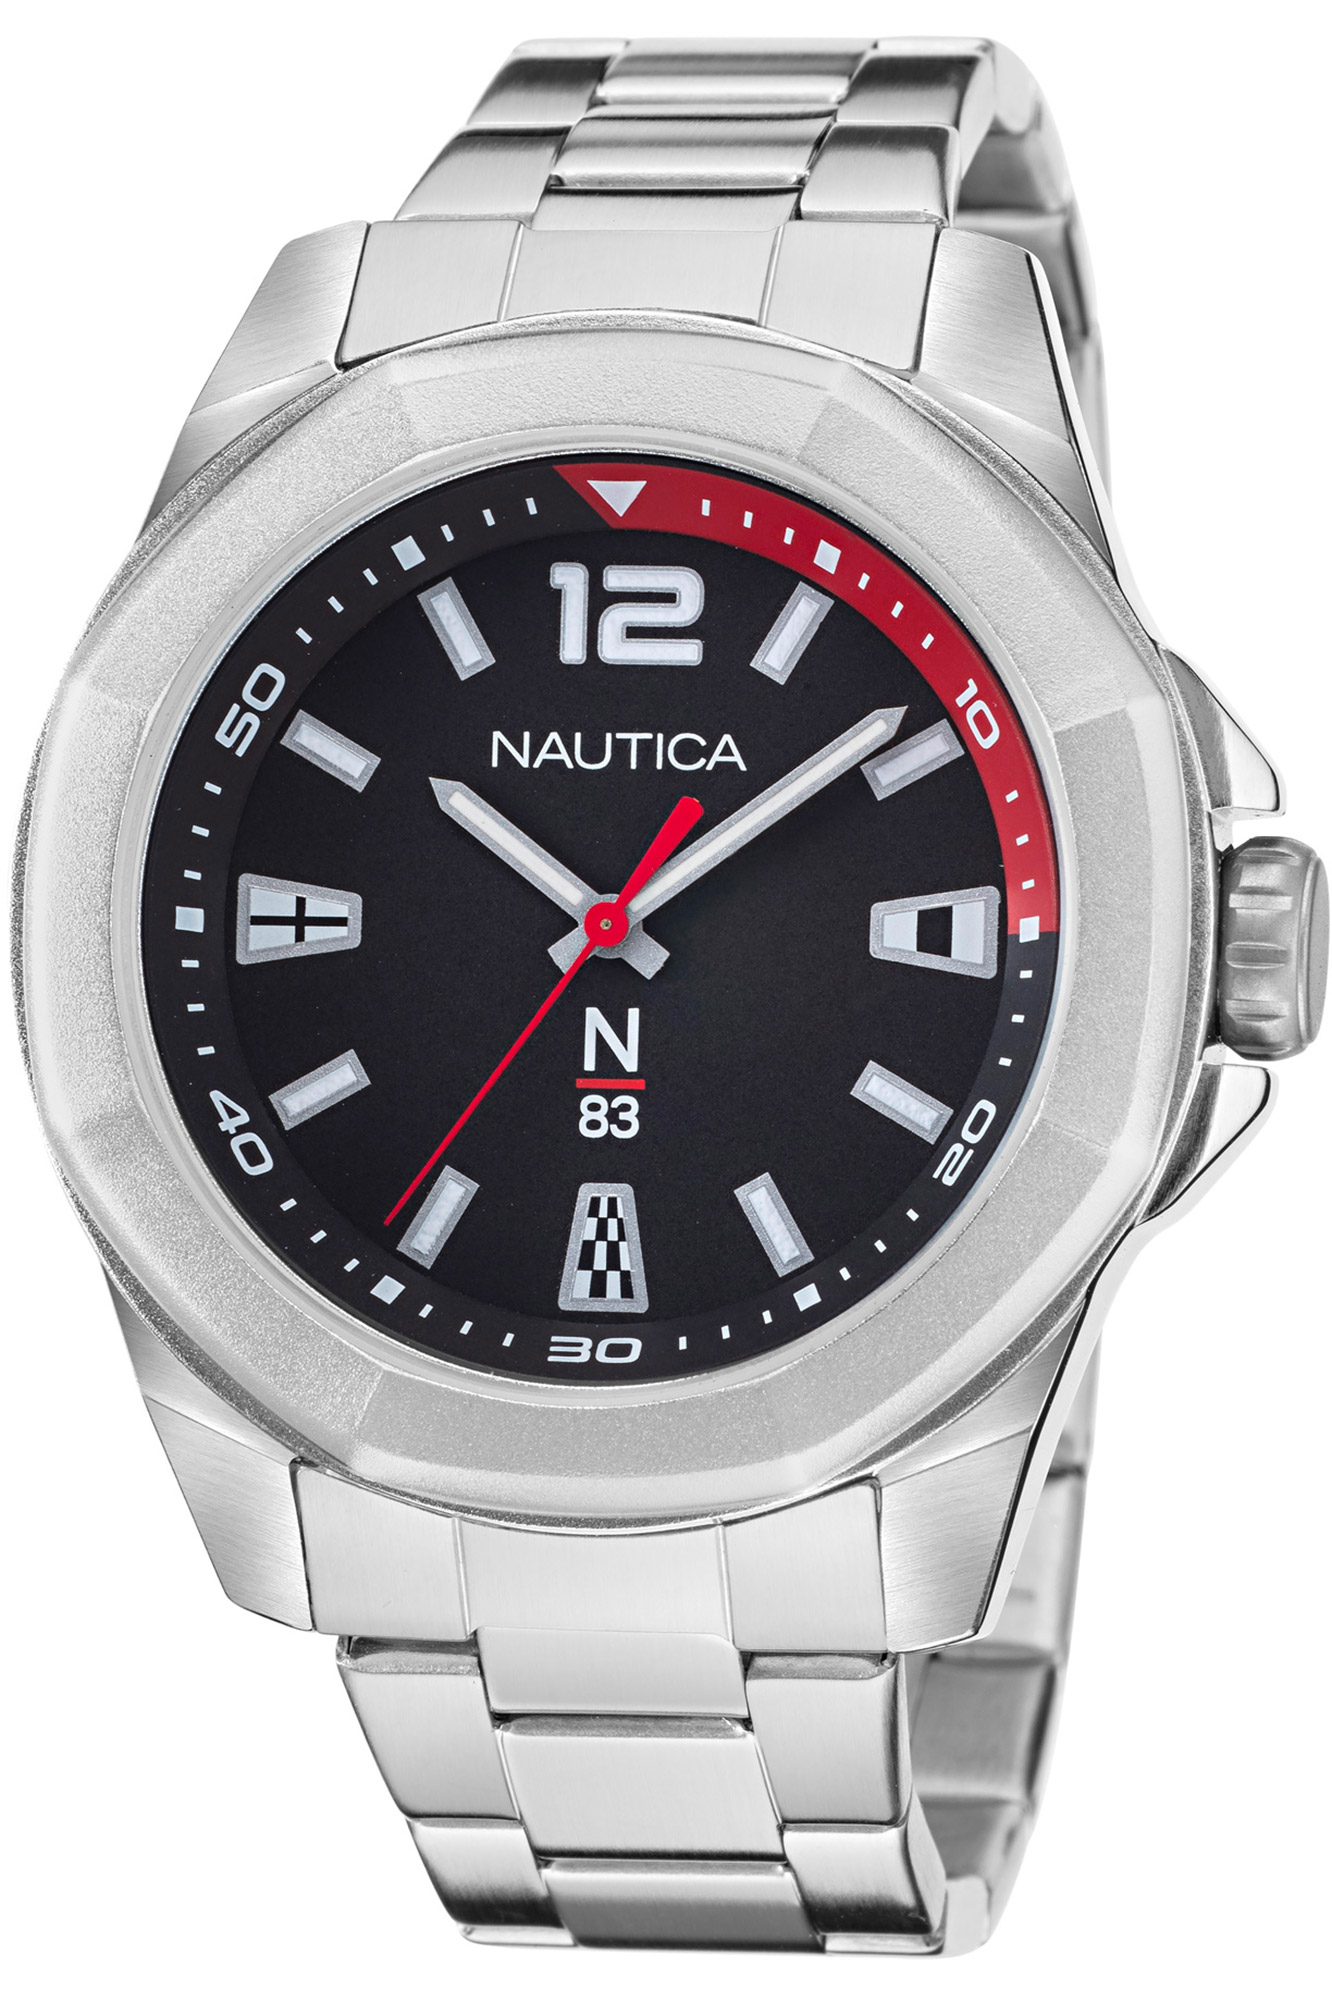 Uhr Nautica naptbf104